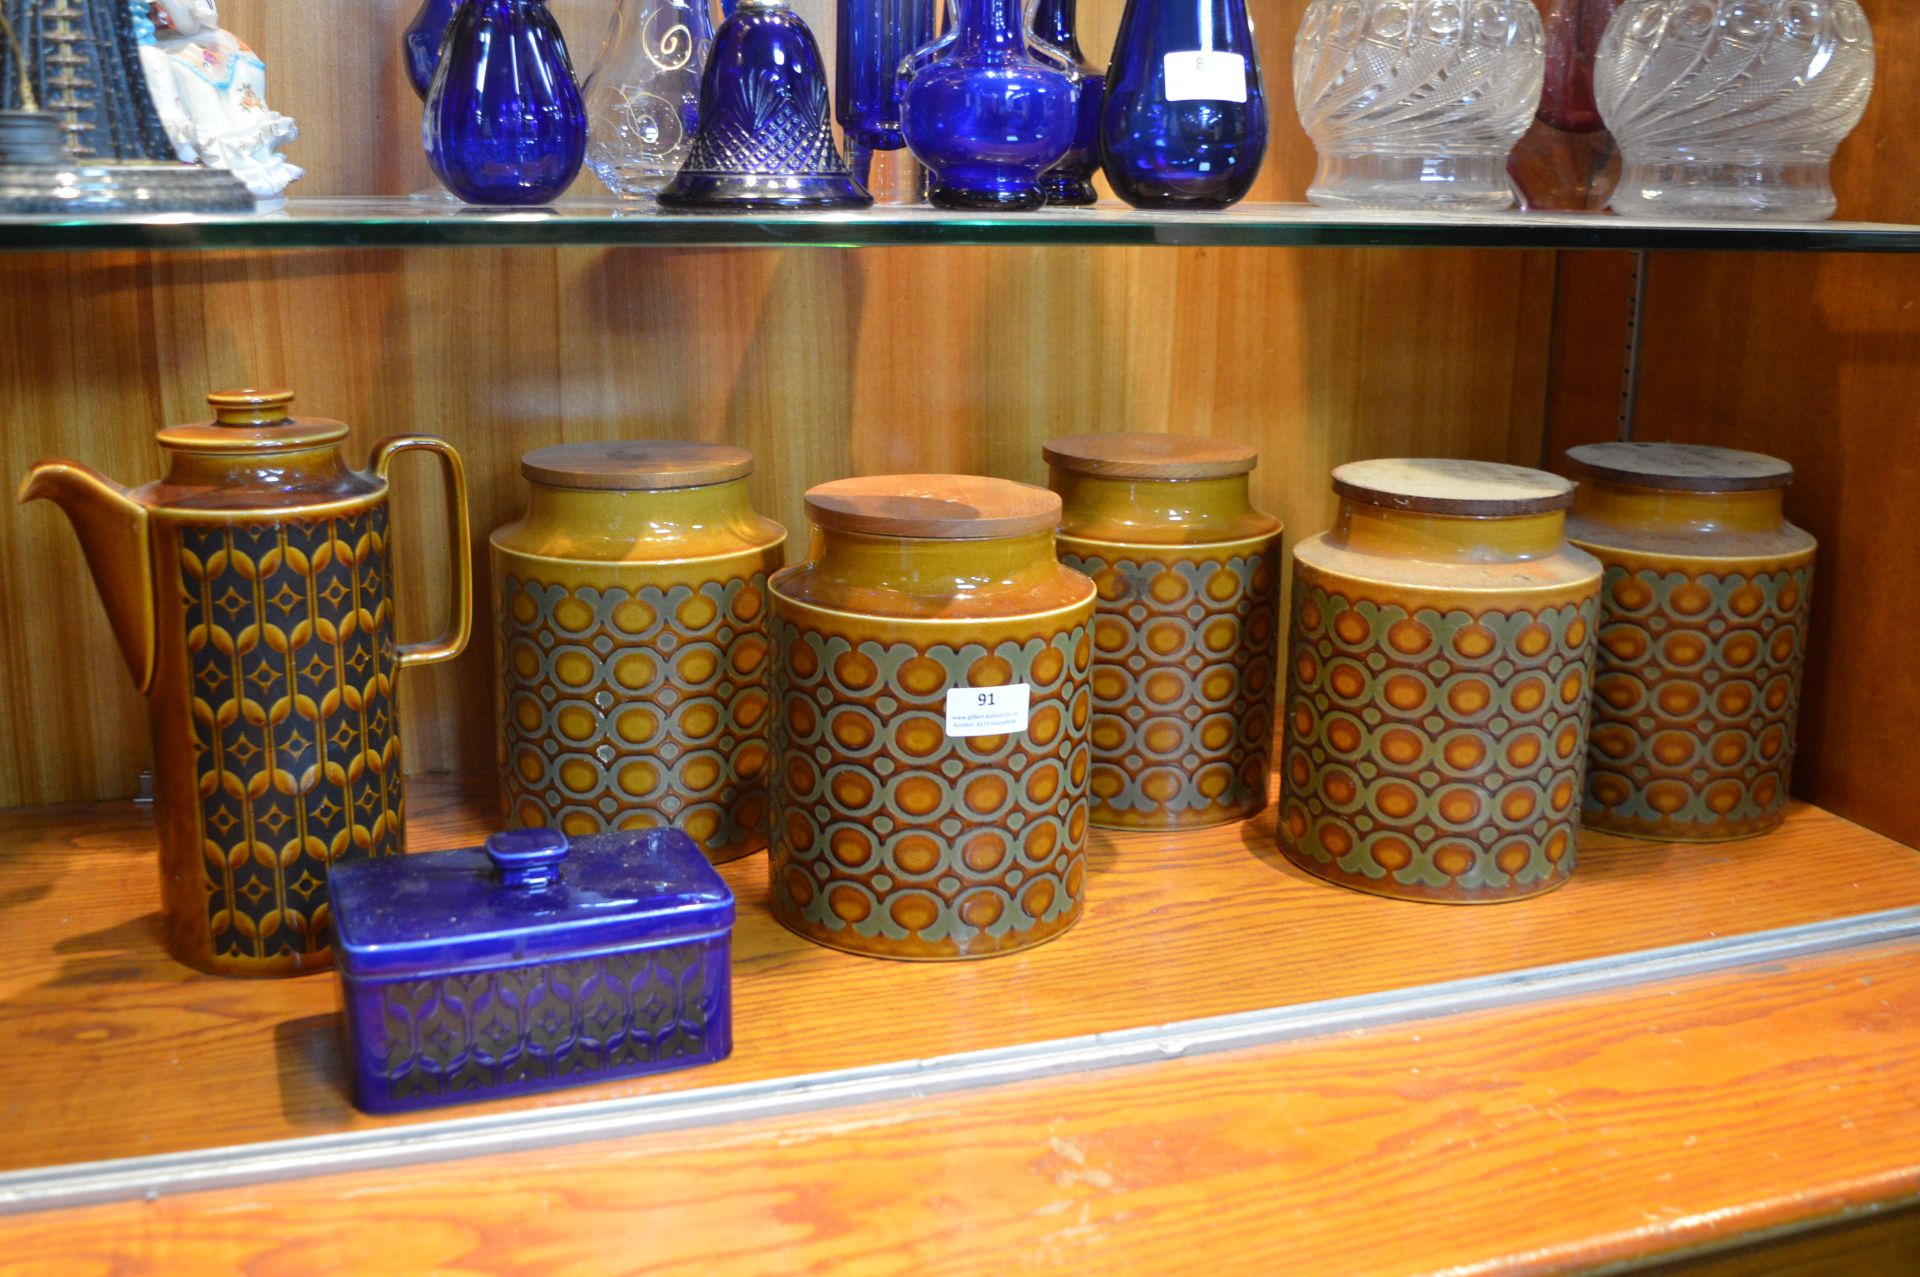 Large Large Hornsea Pottery Storage Jars plus Coff